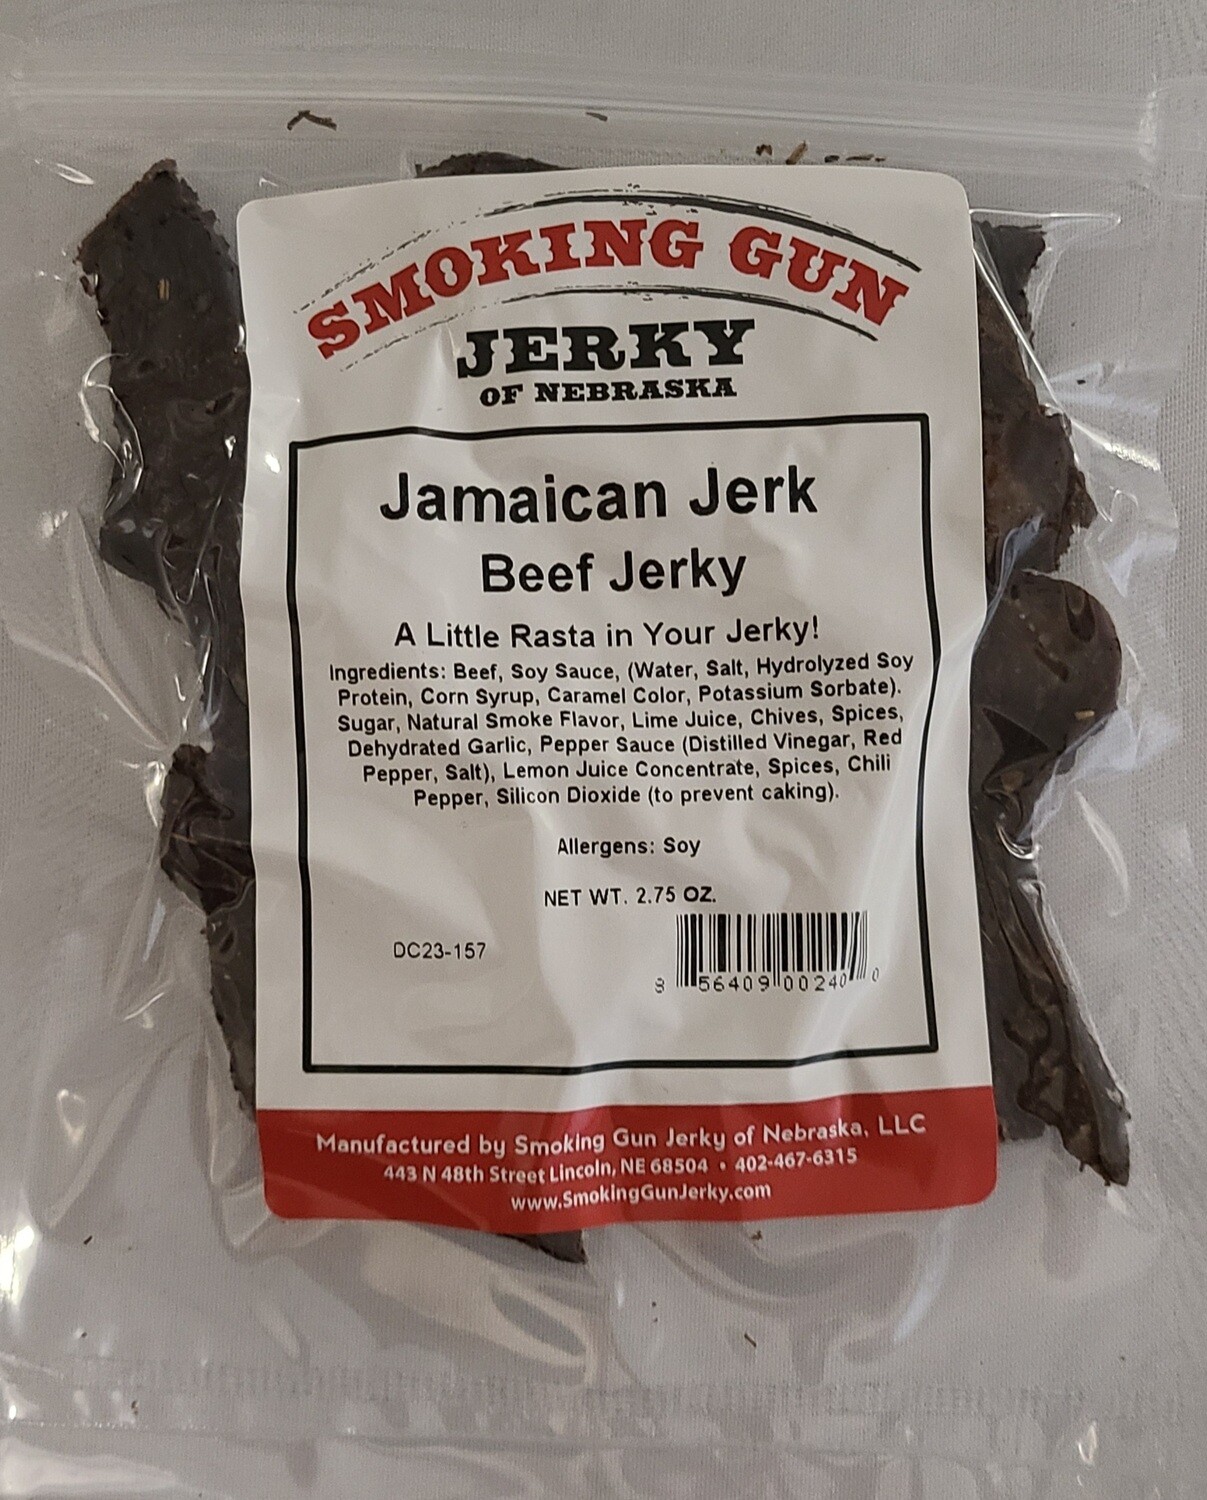 Don't forget the - Smoking Gun Jerky of Nebraska